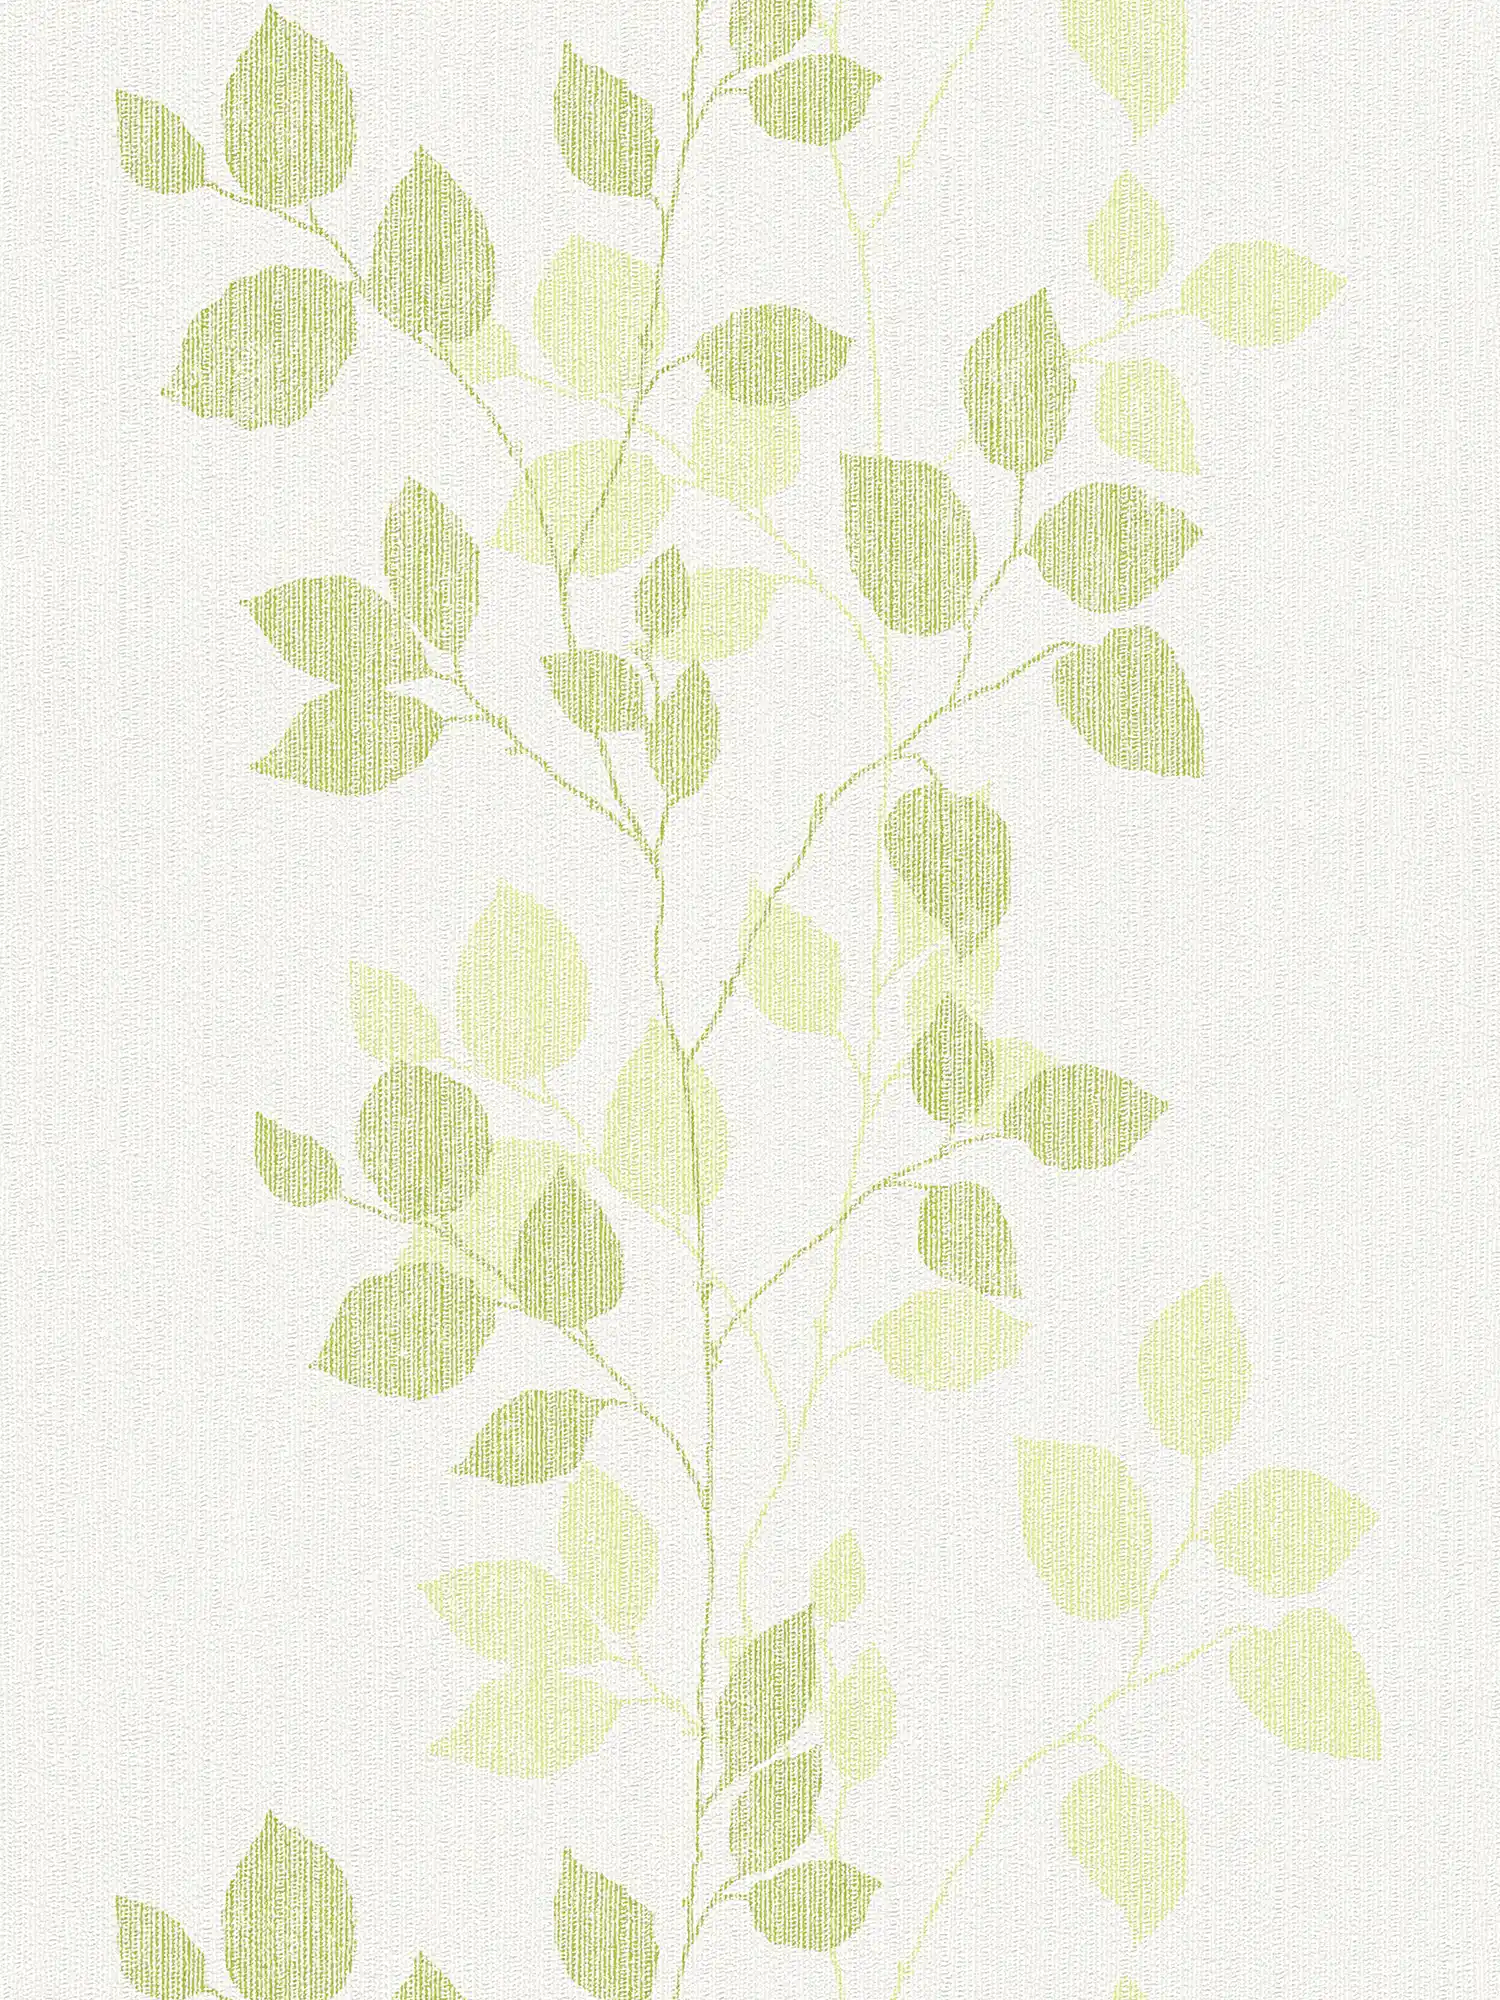 Mustertapete Blätter in Frühlingsfarben – Grün, Weiß
